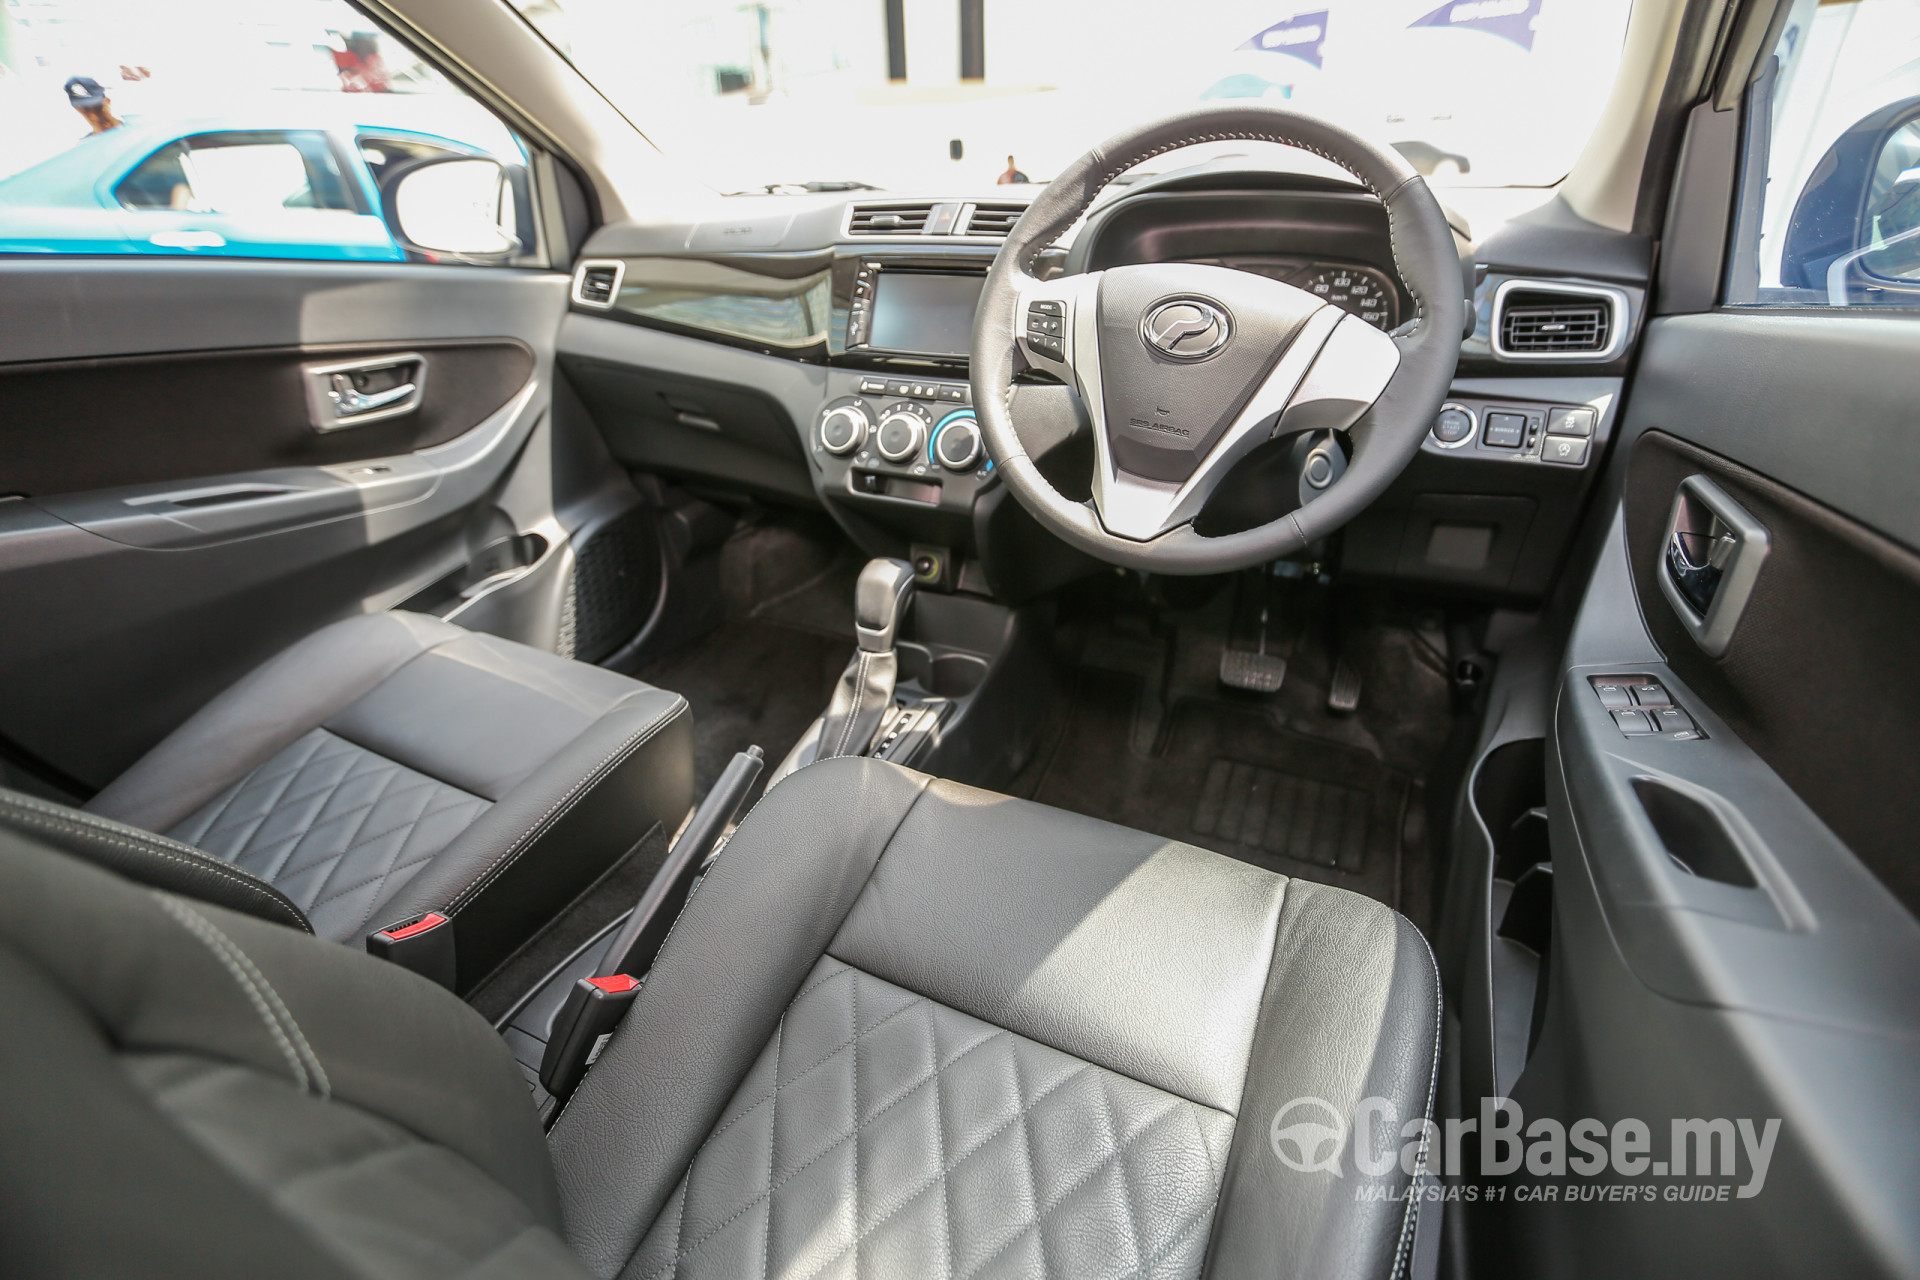 Perodua Bezza D63D (2016) Interior Image #31152 in 